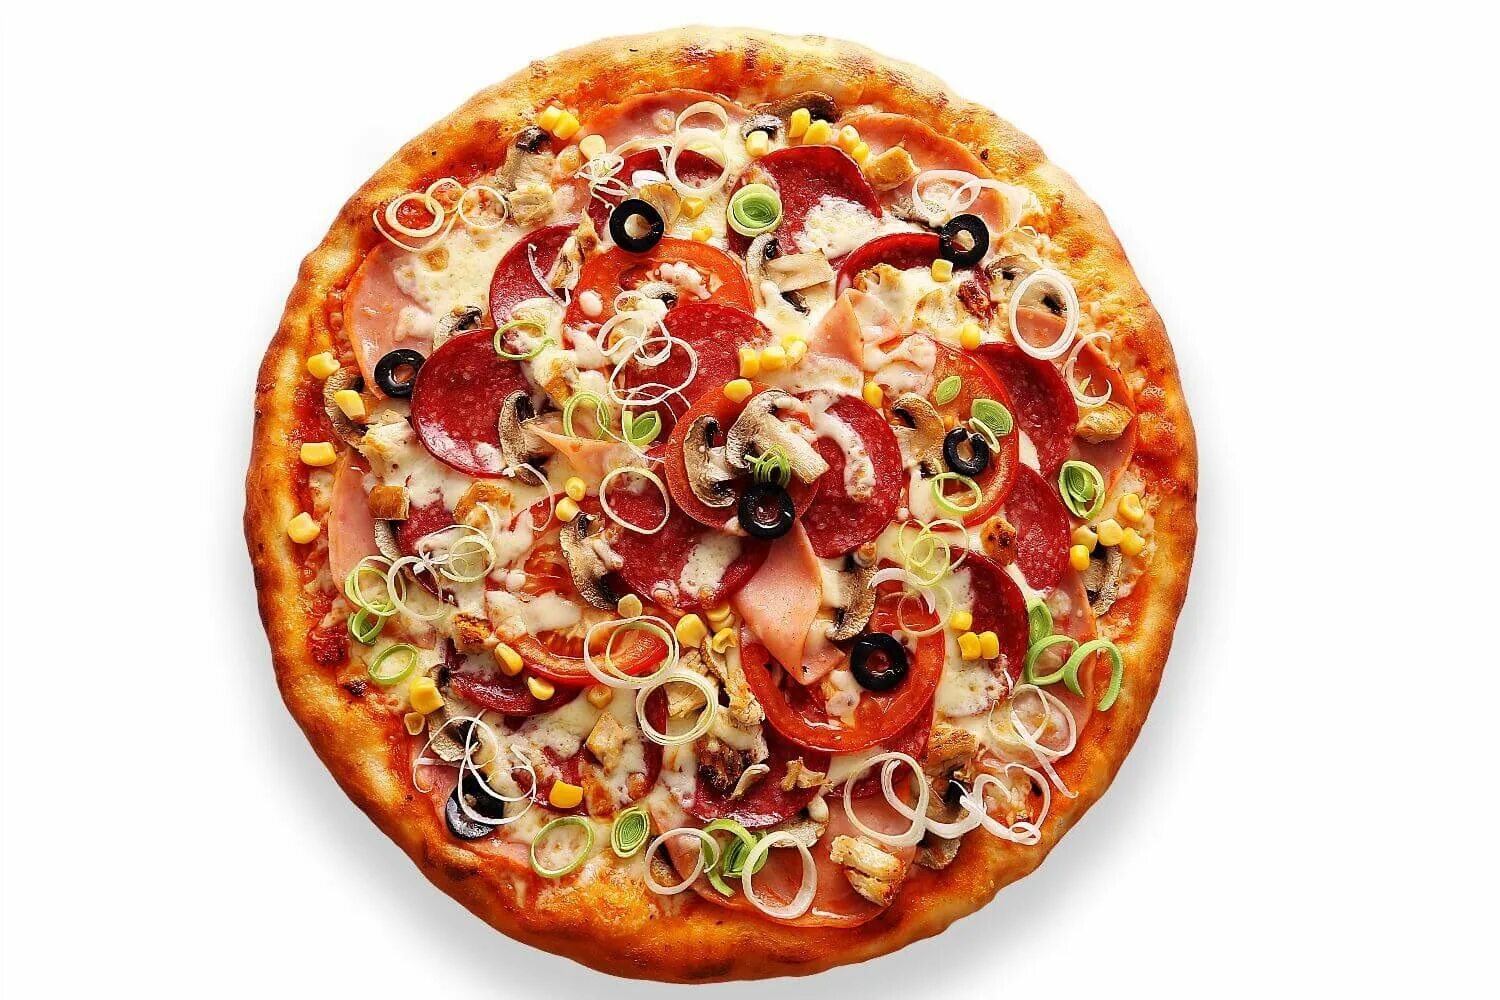 Пицца кореновск. "Пицца". Пицца сверху. Пицца на белом фоне. Сочная пицца.